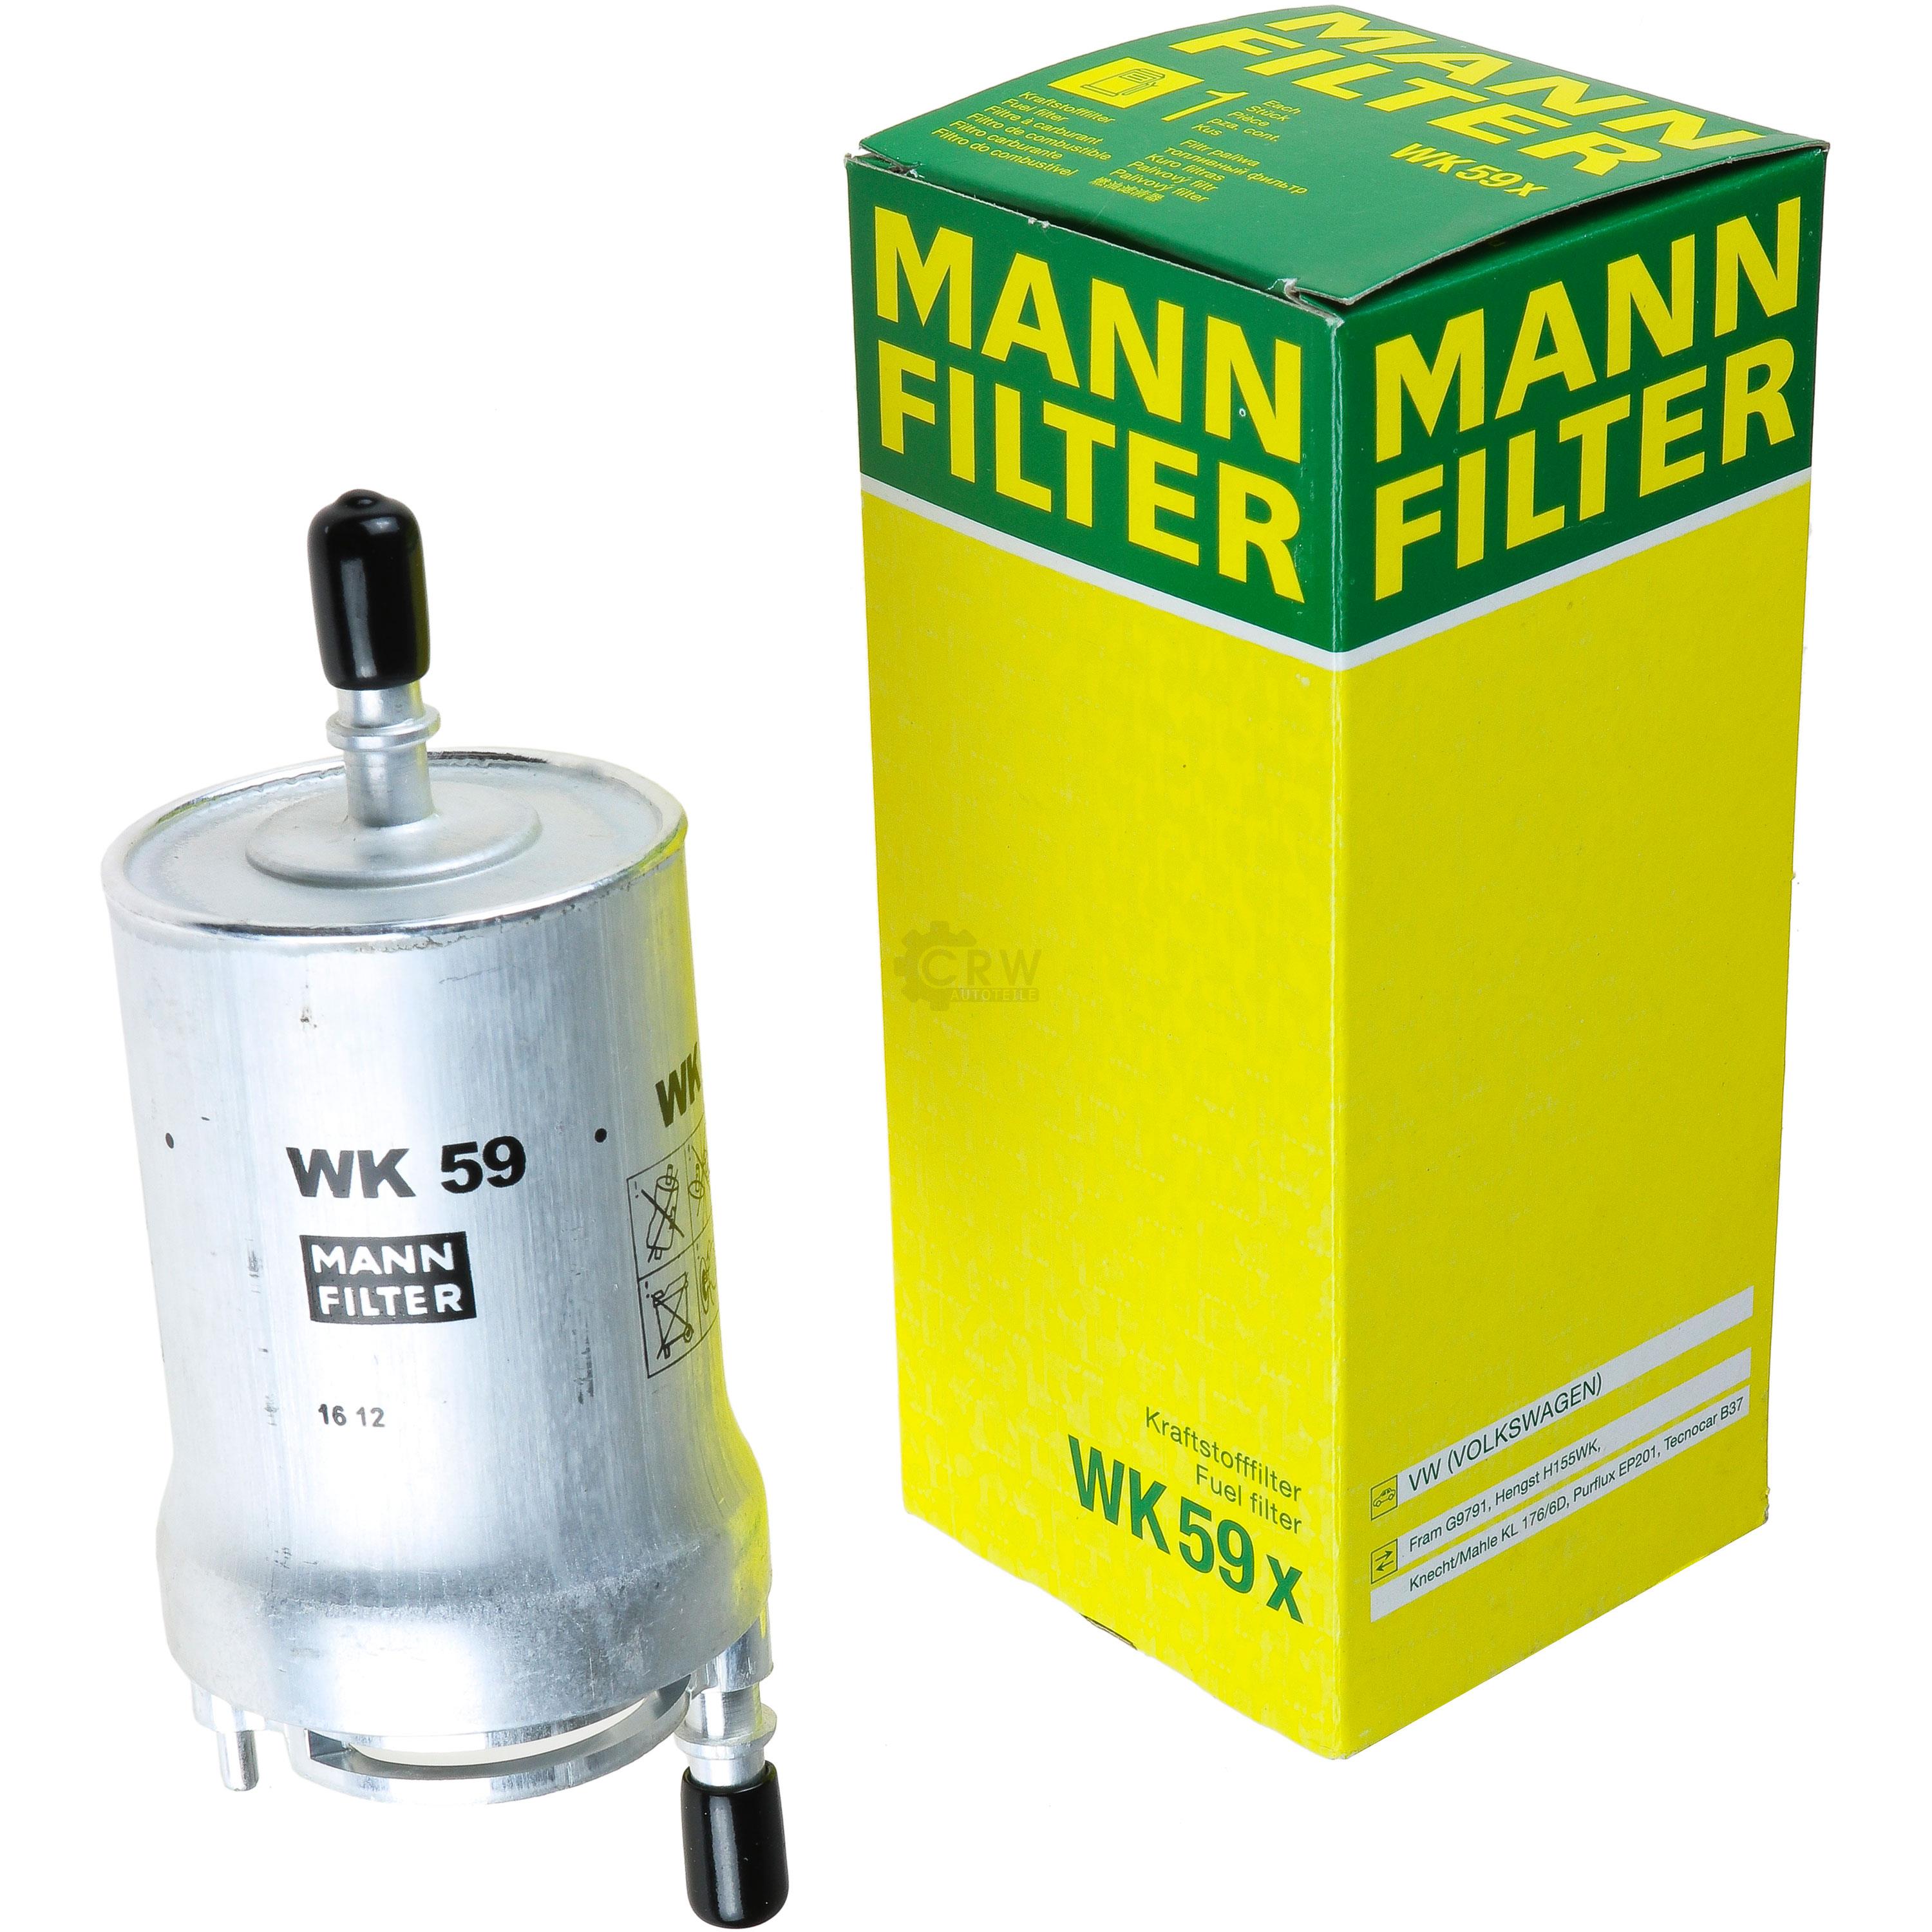 MANN-FILTER Kraftstofffilter WK 59 x Fuel Filter